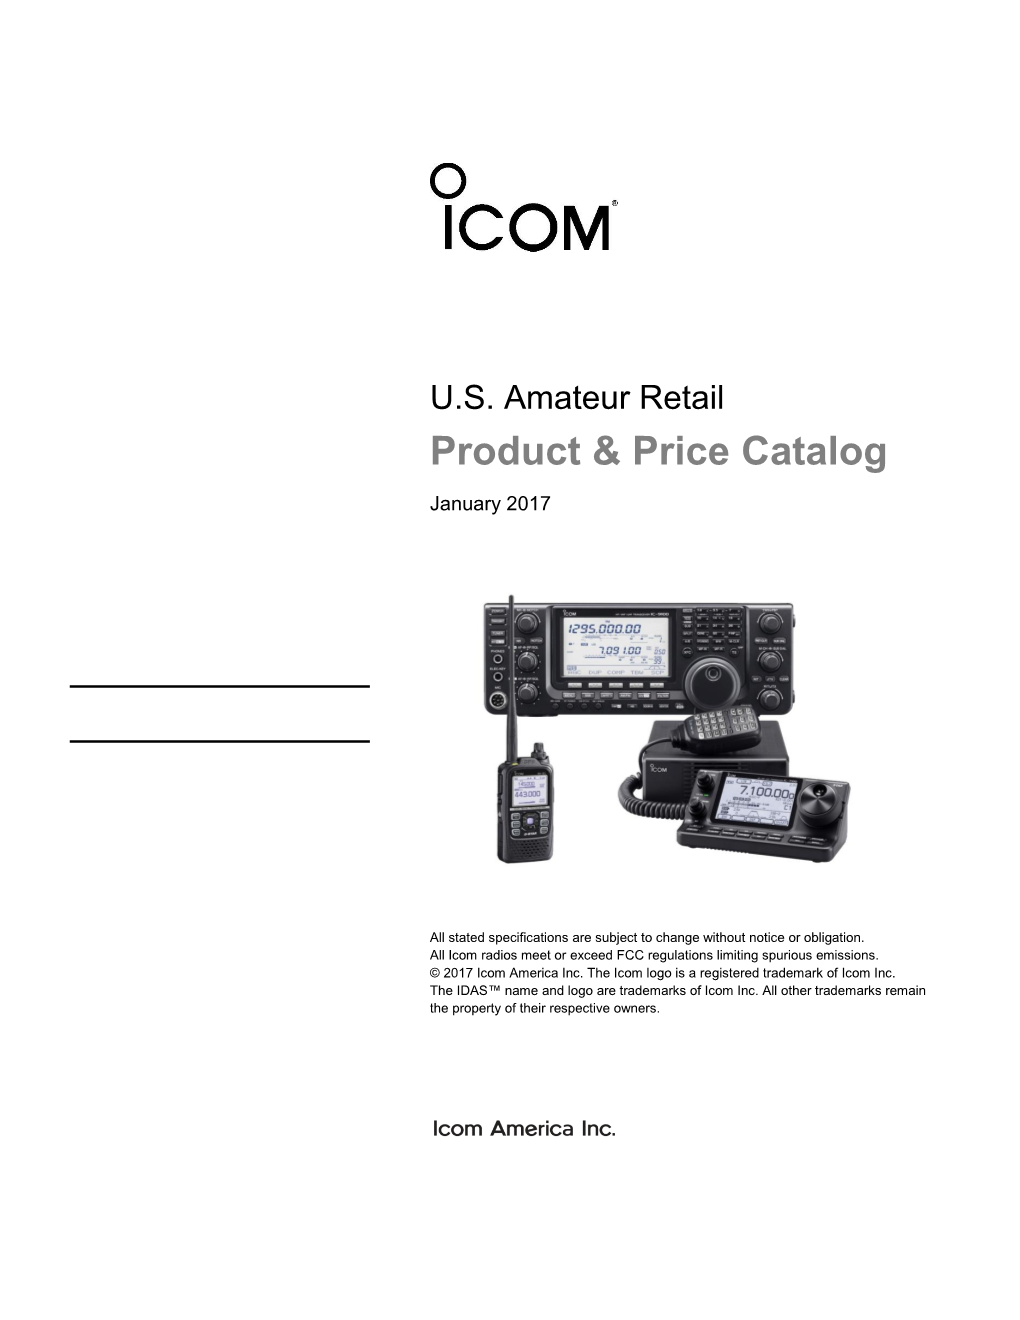 Product & Price Catalog